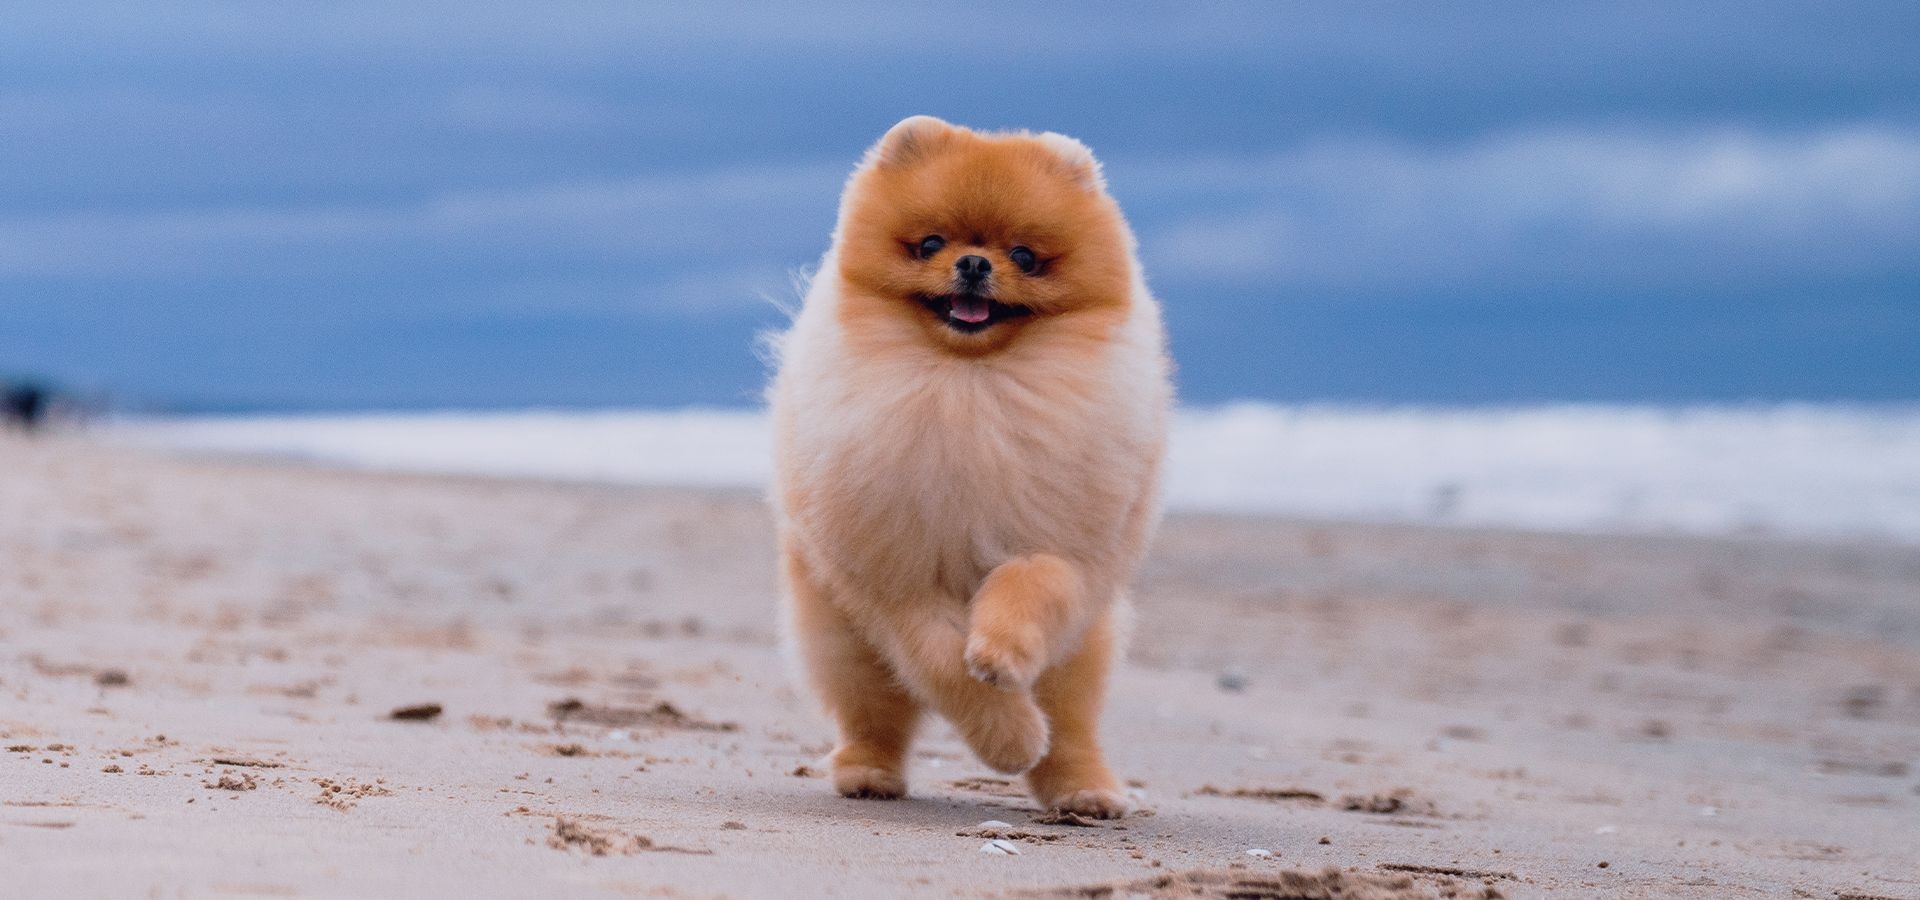 promerian dog running in the beach